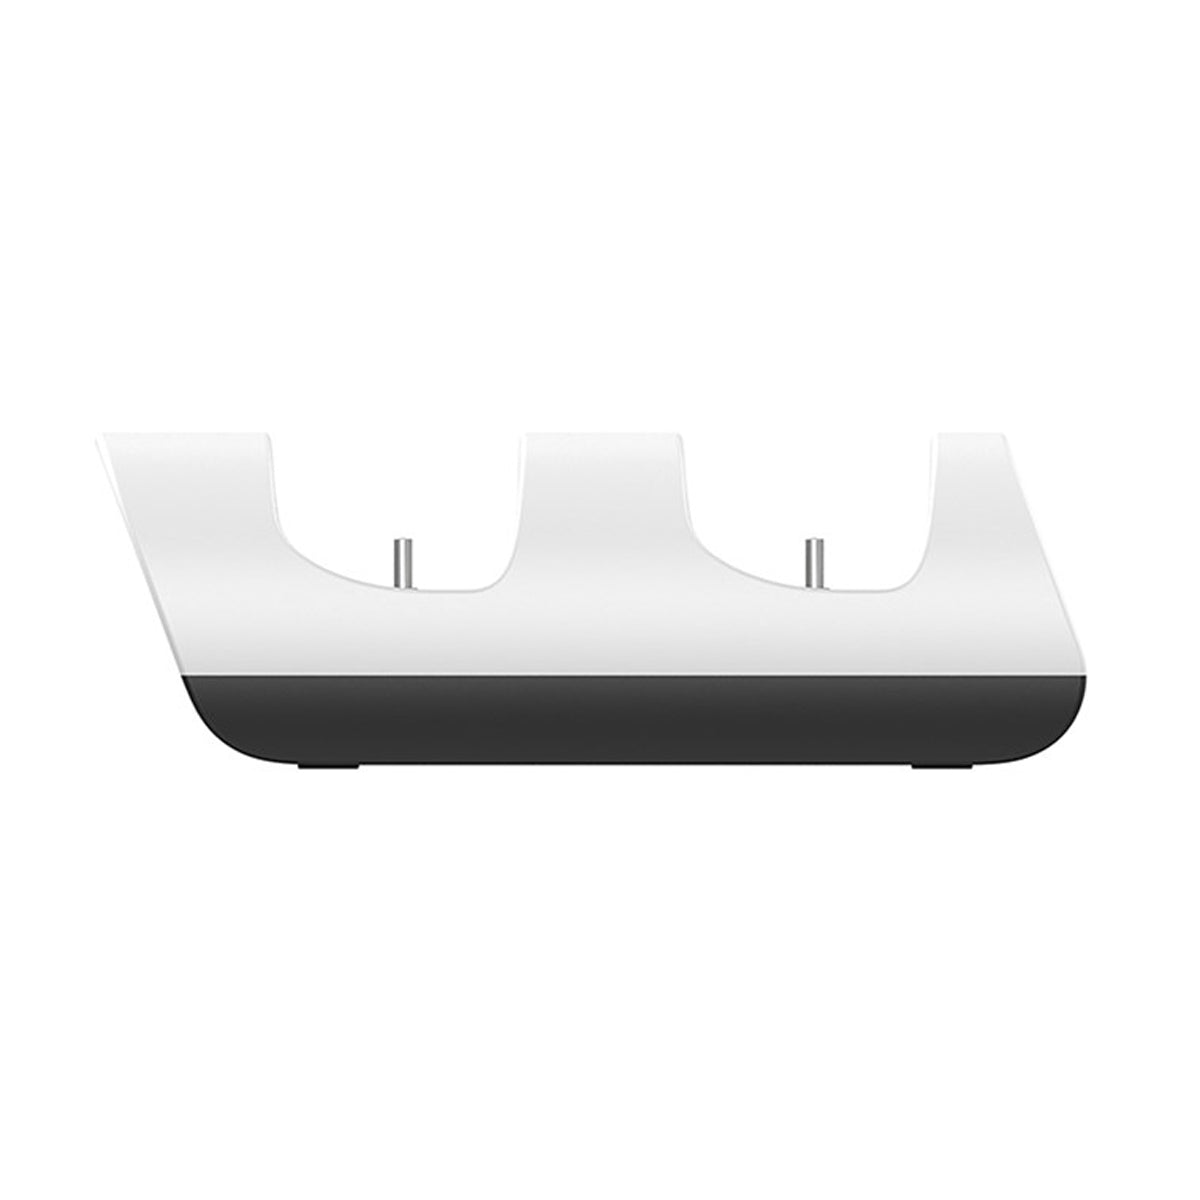 Dual Ladestation für 2x PS5 Controller Weiß USB-C Charger LED Anzeige Ladegerät